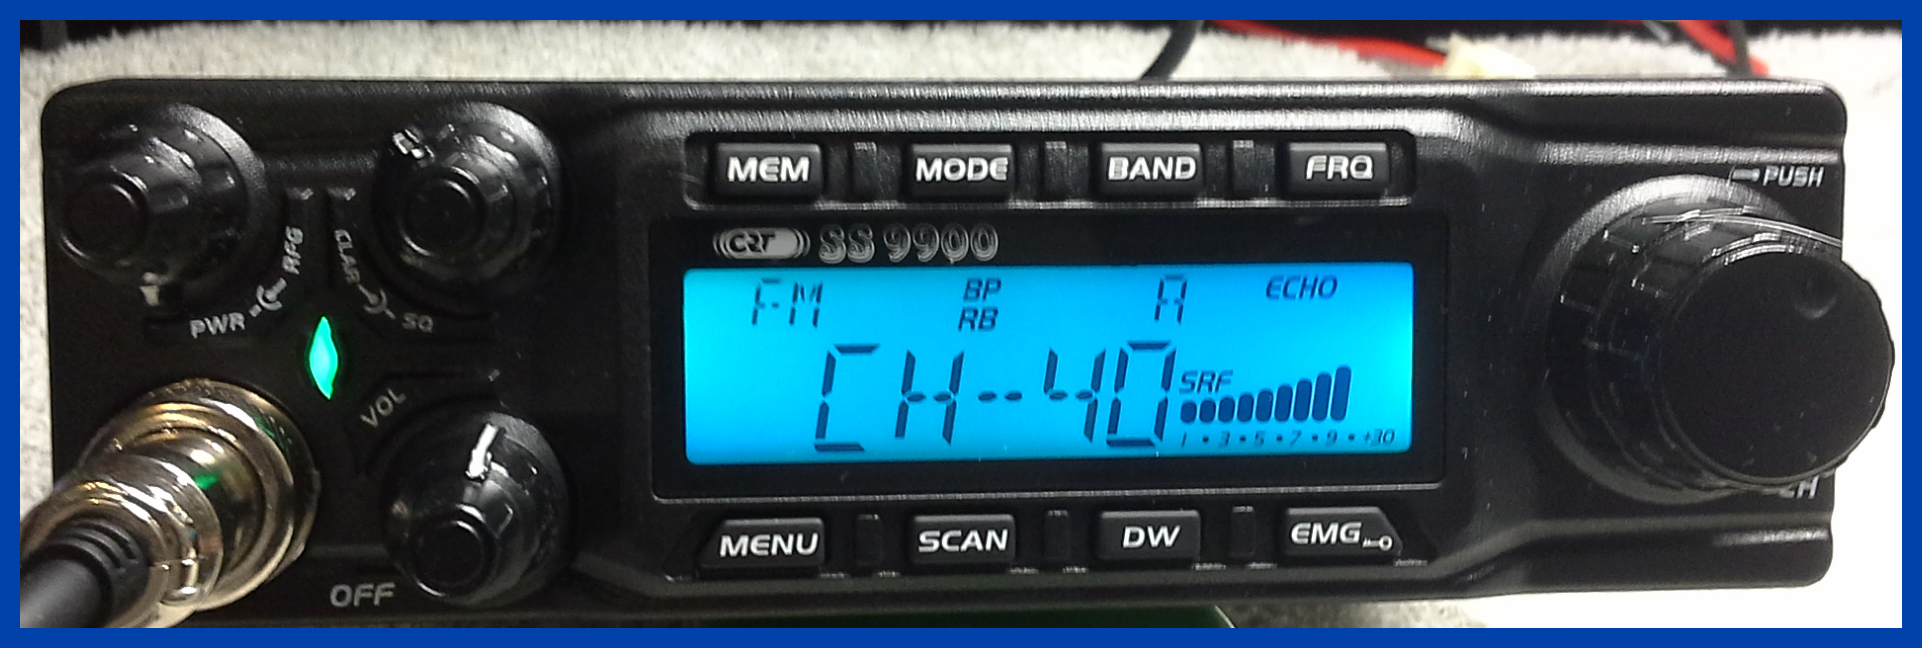 CRT SS9900 CB Radio Receiving FM